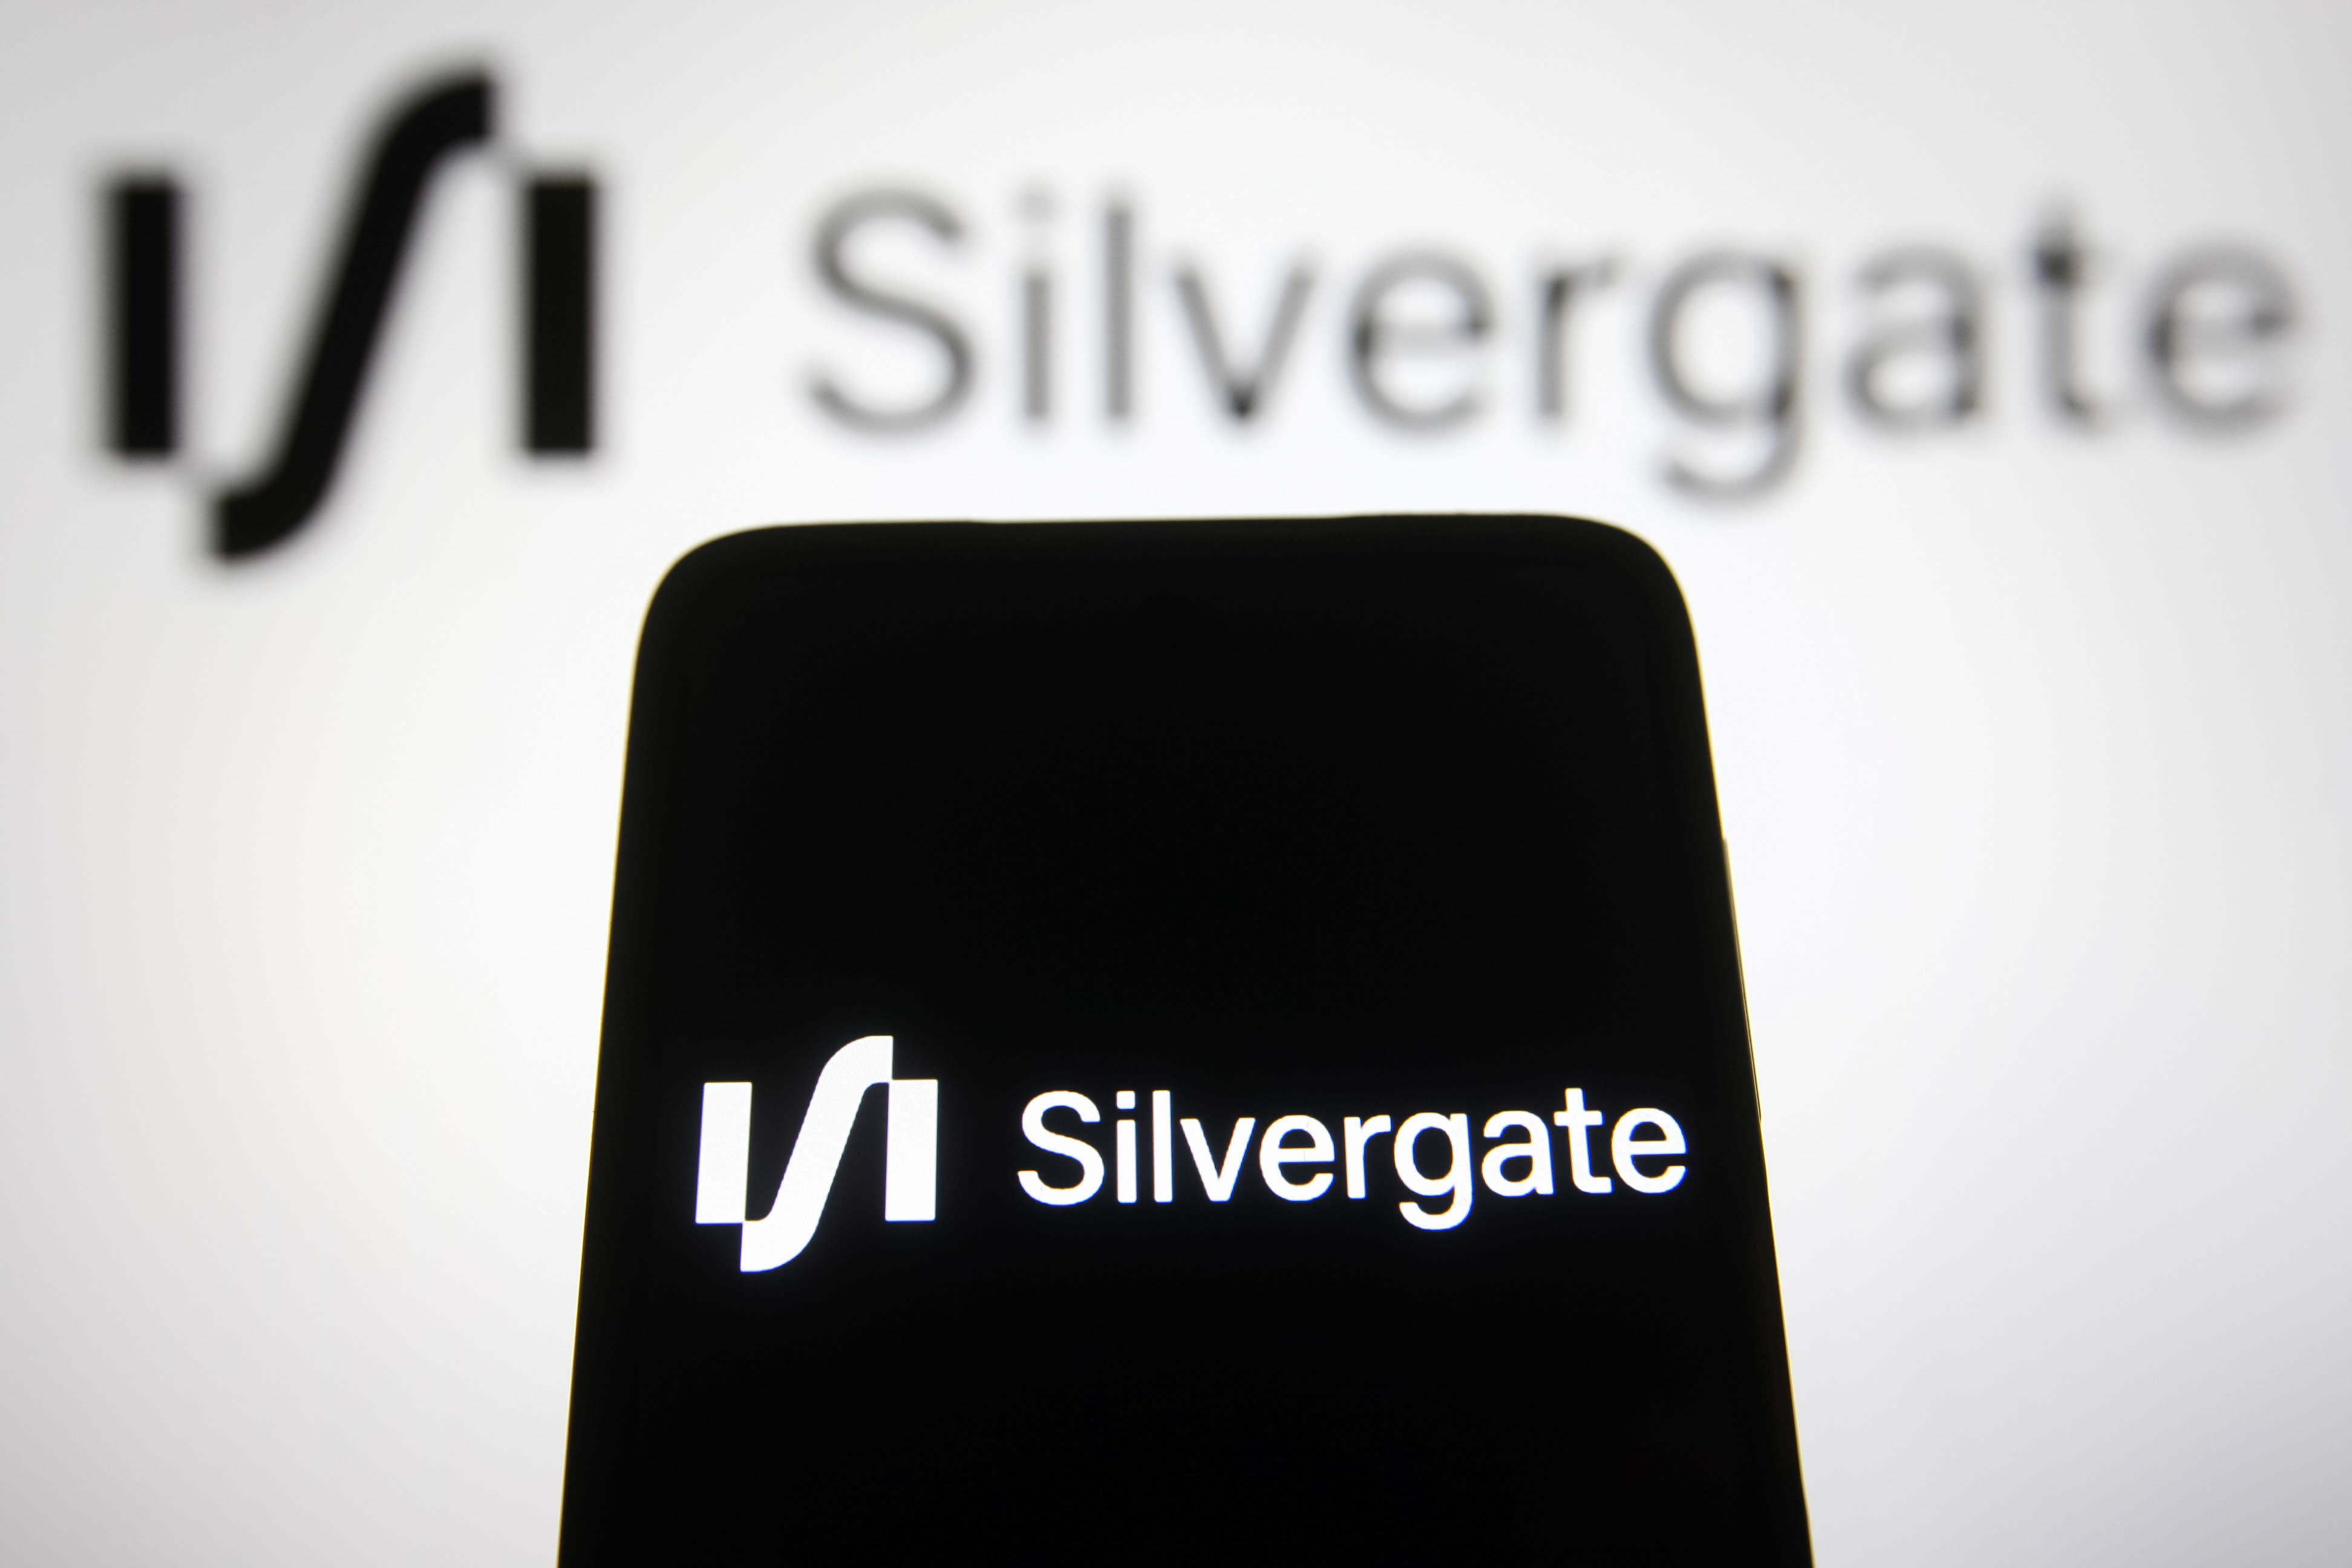 Silvergate, Etsy, SVB Financial, Uber e mais